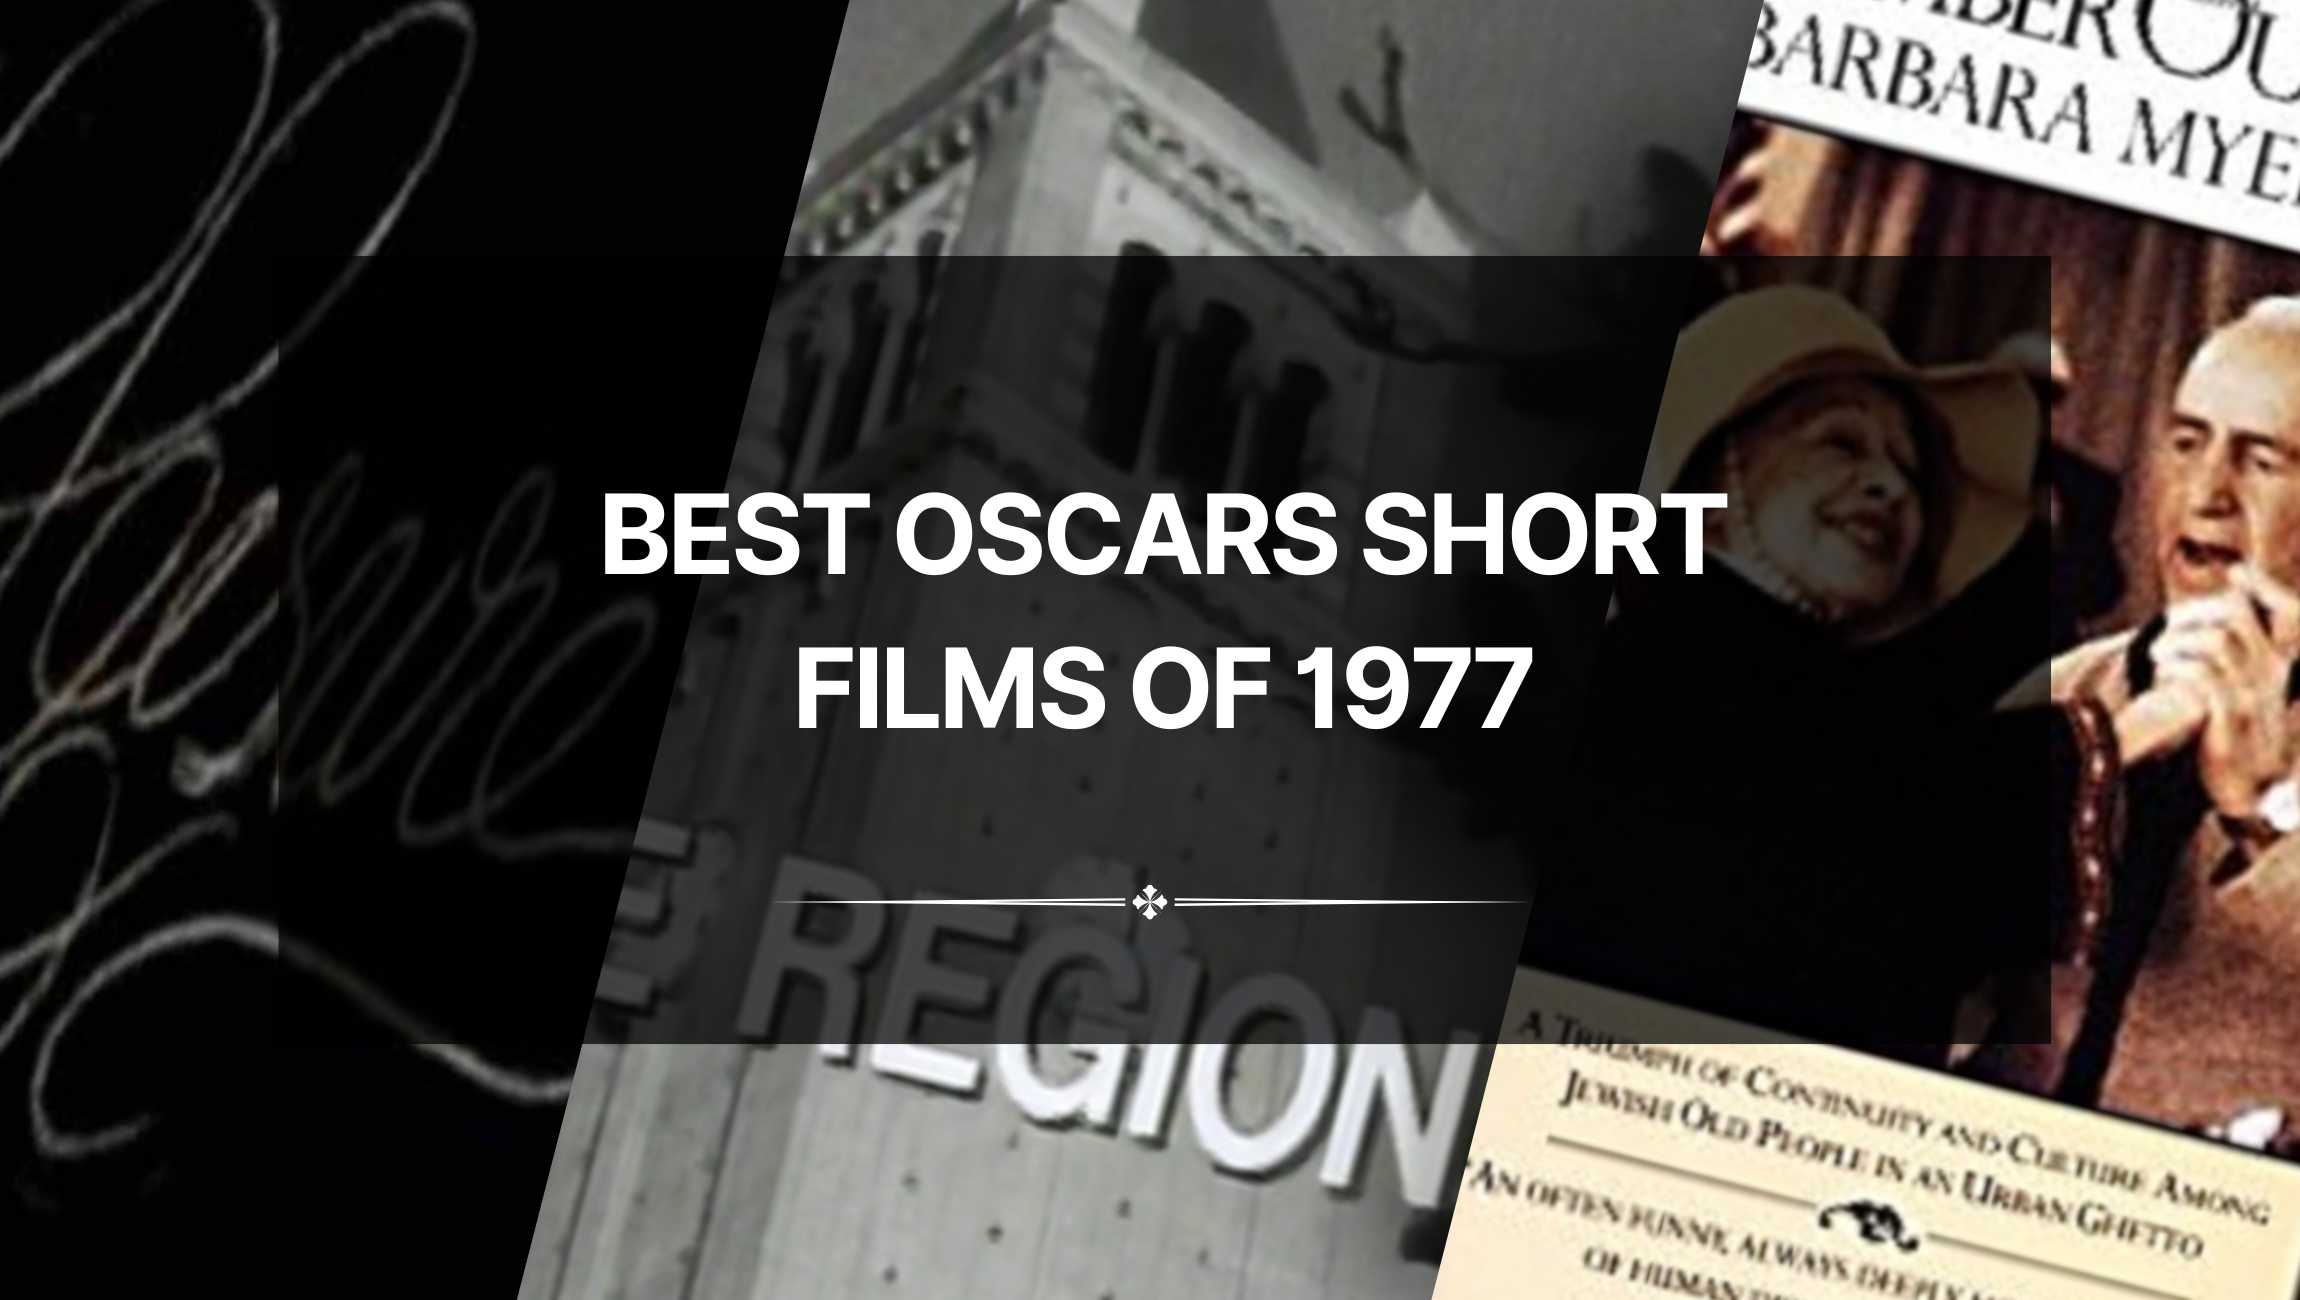 Best Oscars Short Films of 1977